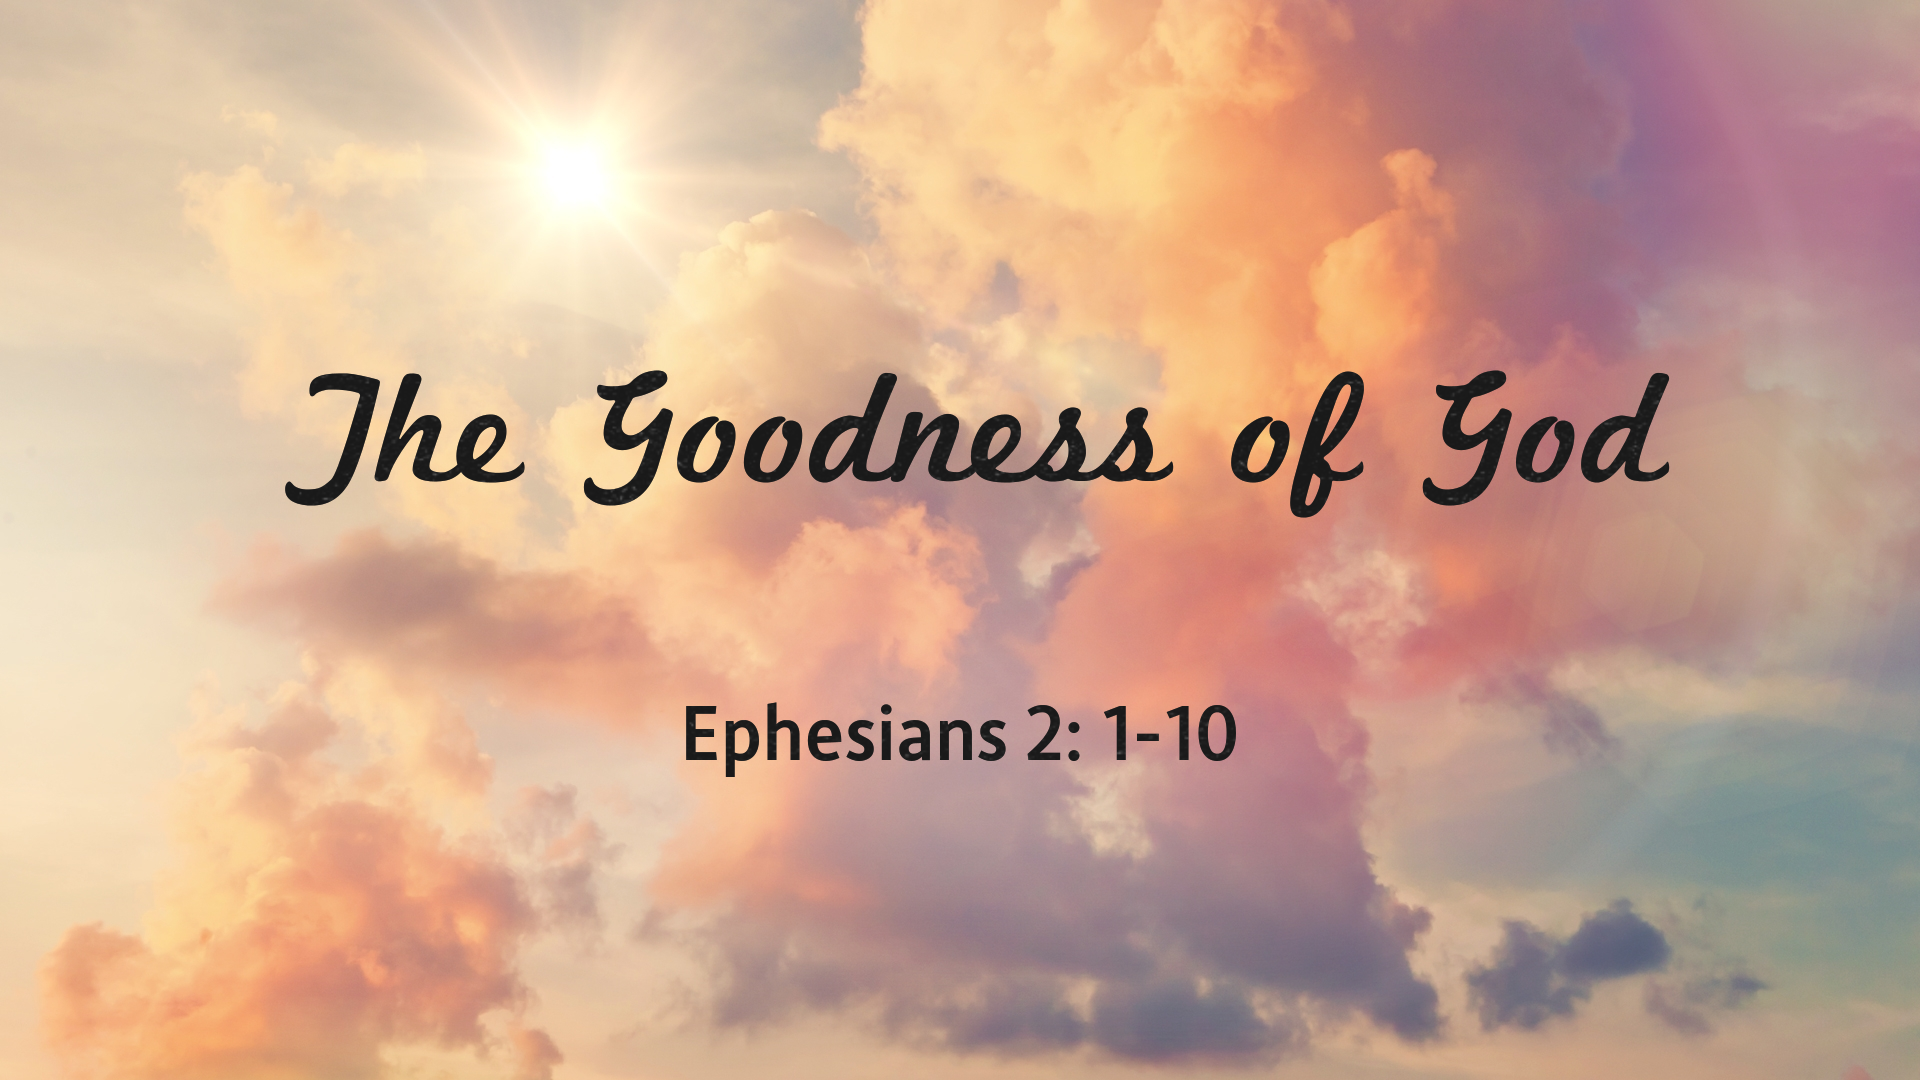 Apr 18, 2021 - The Goodness of God (Video) Ephesians 2: 1-10